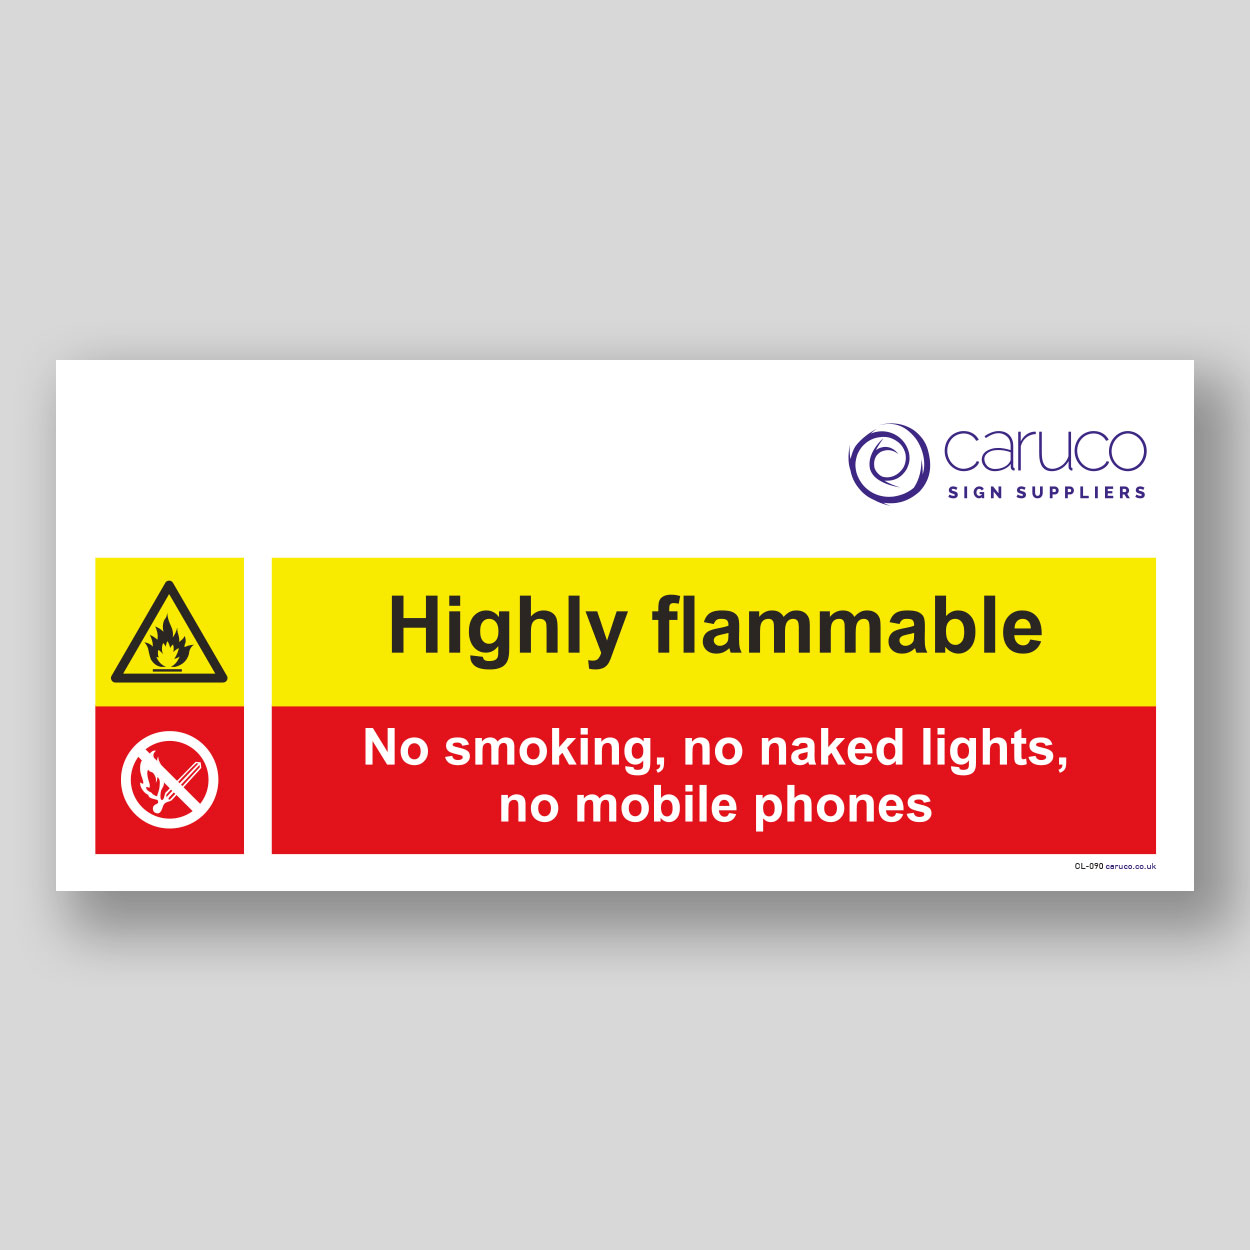 CL-090 Highly flammable - no smoking, no light, no phones